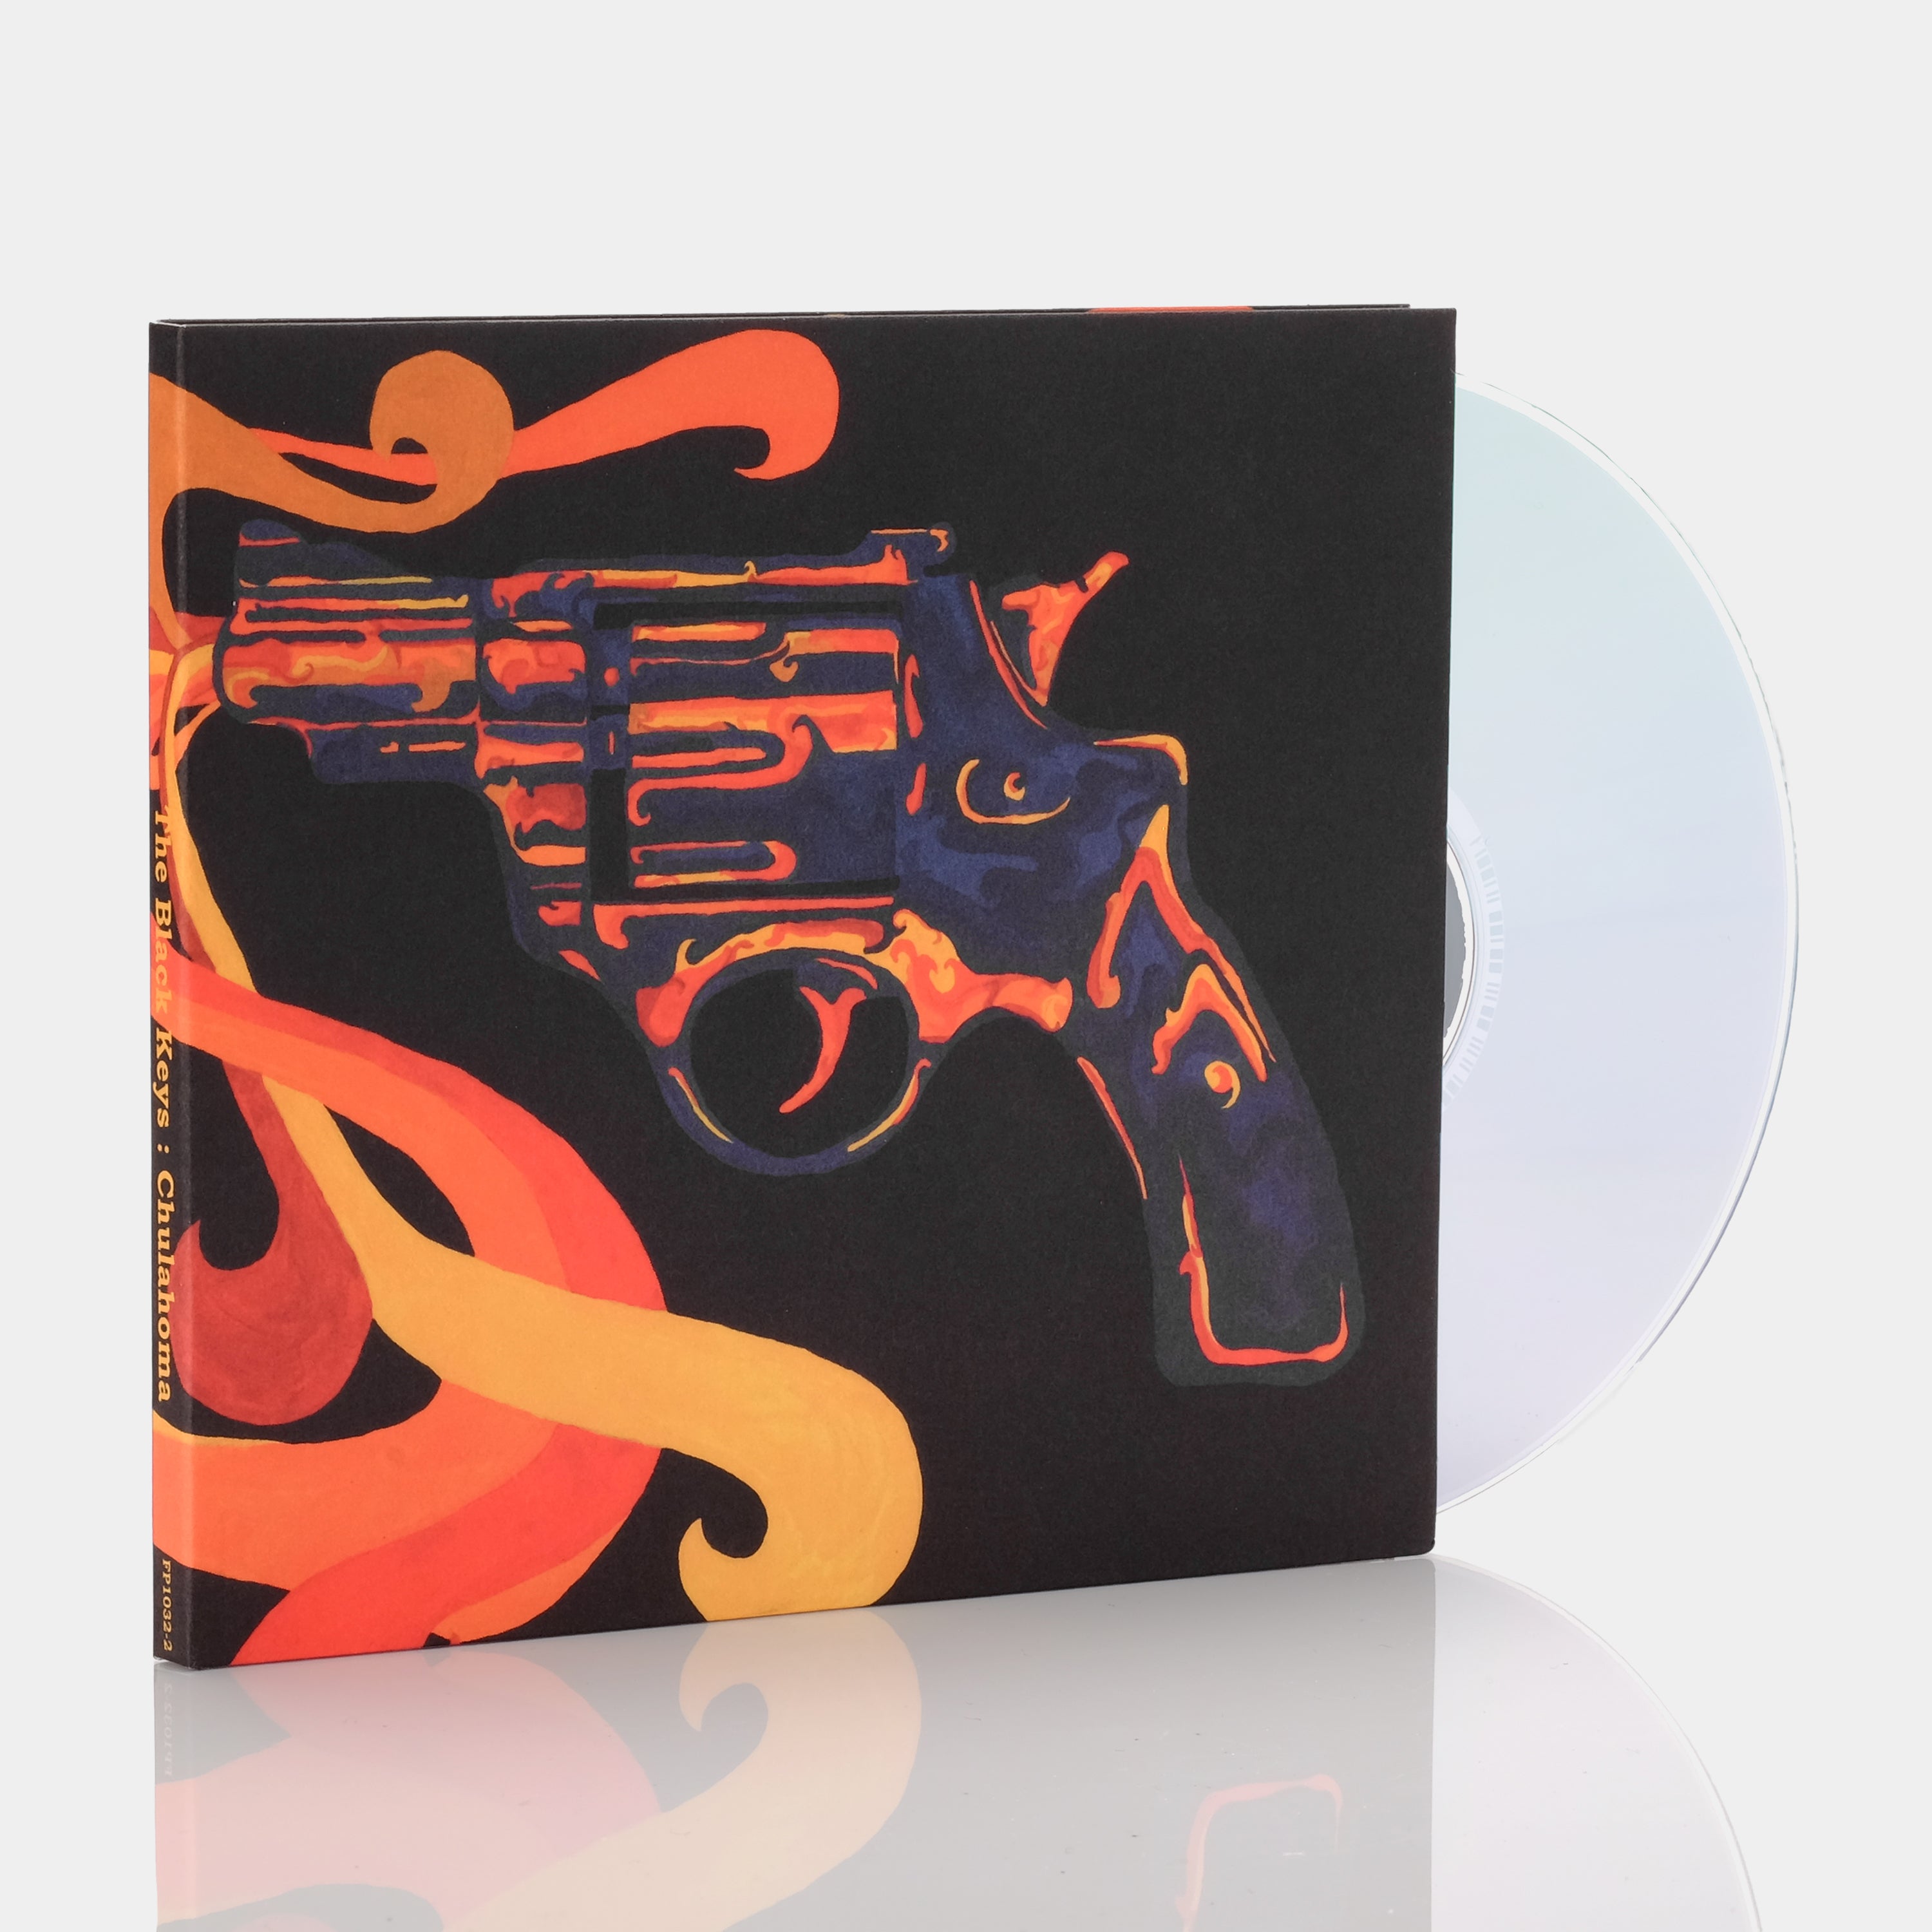 The Black Keys - Chulahoma CD